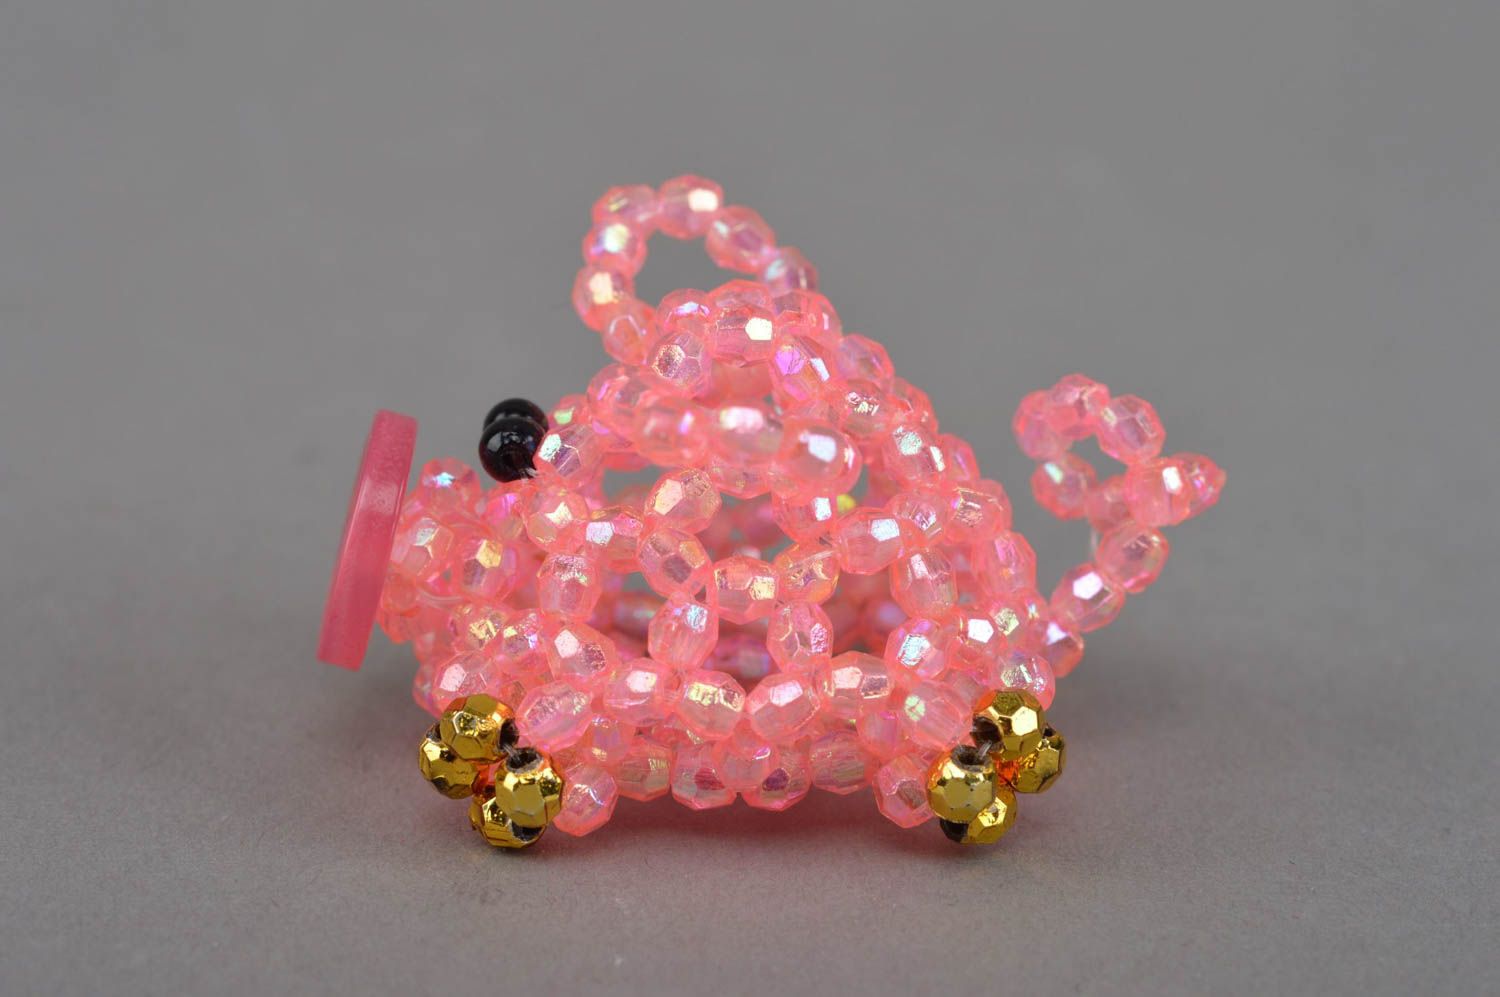 Small unusual handmade woven bead statuette of pink pig designer home decor photo 2